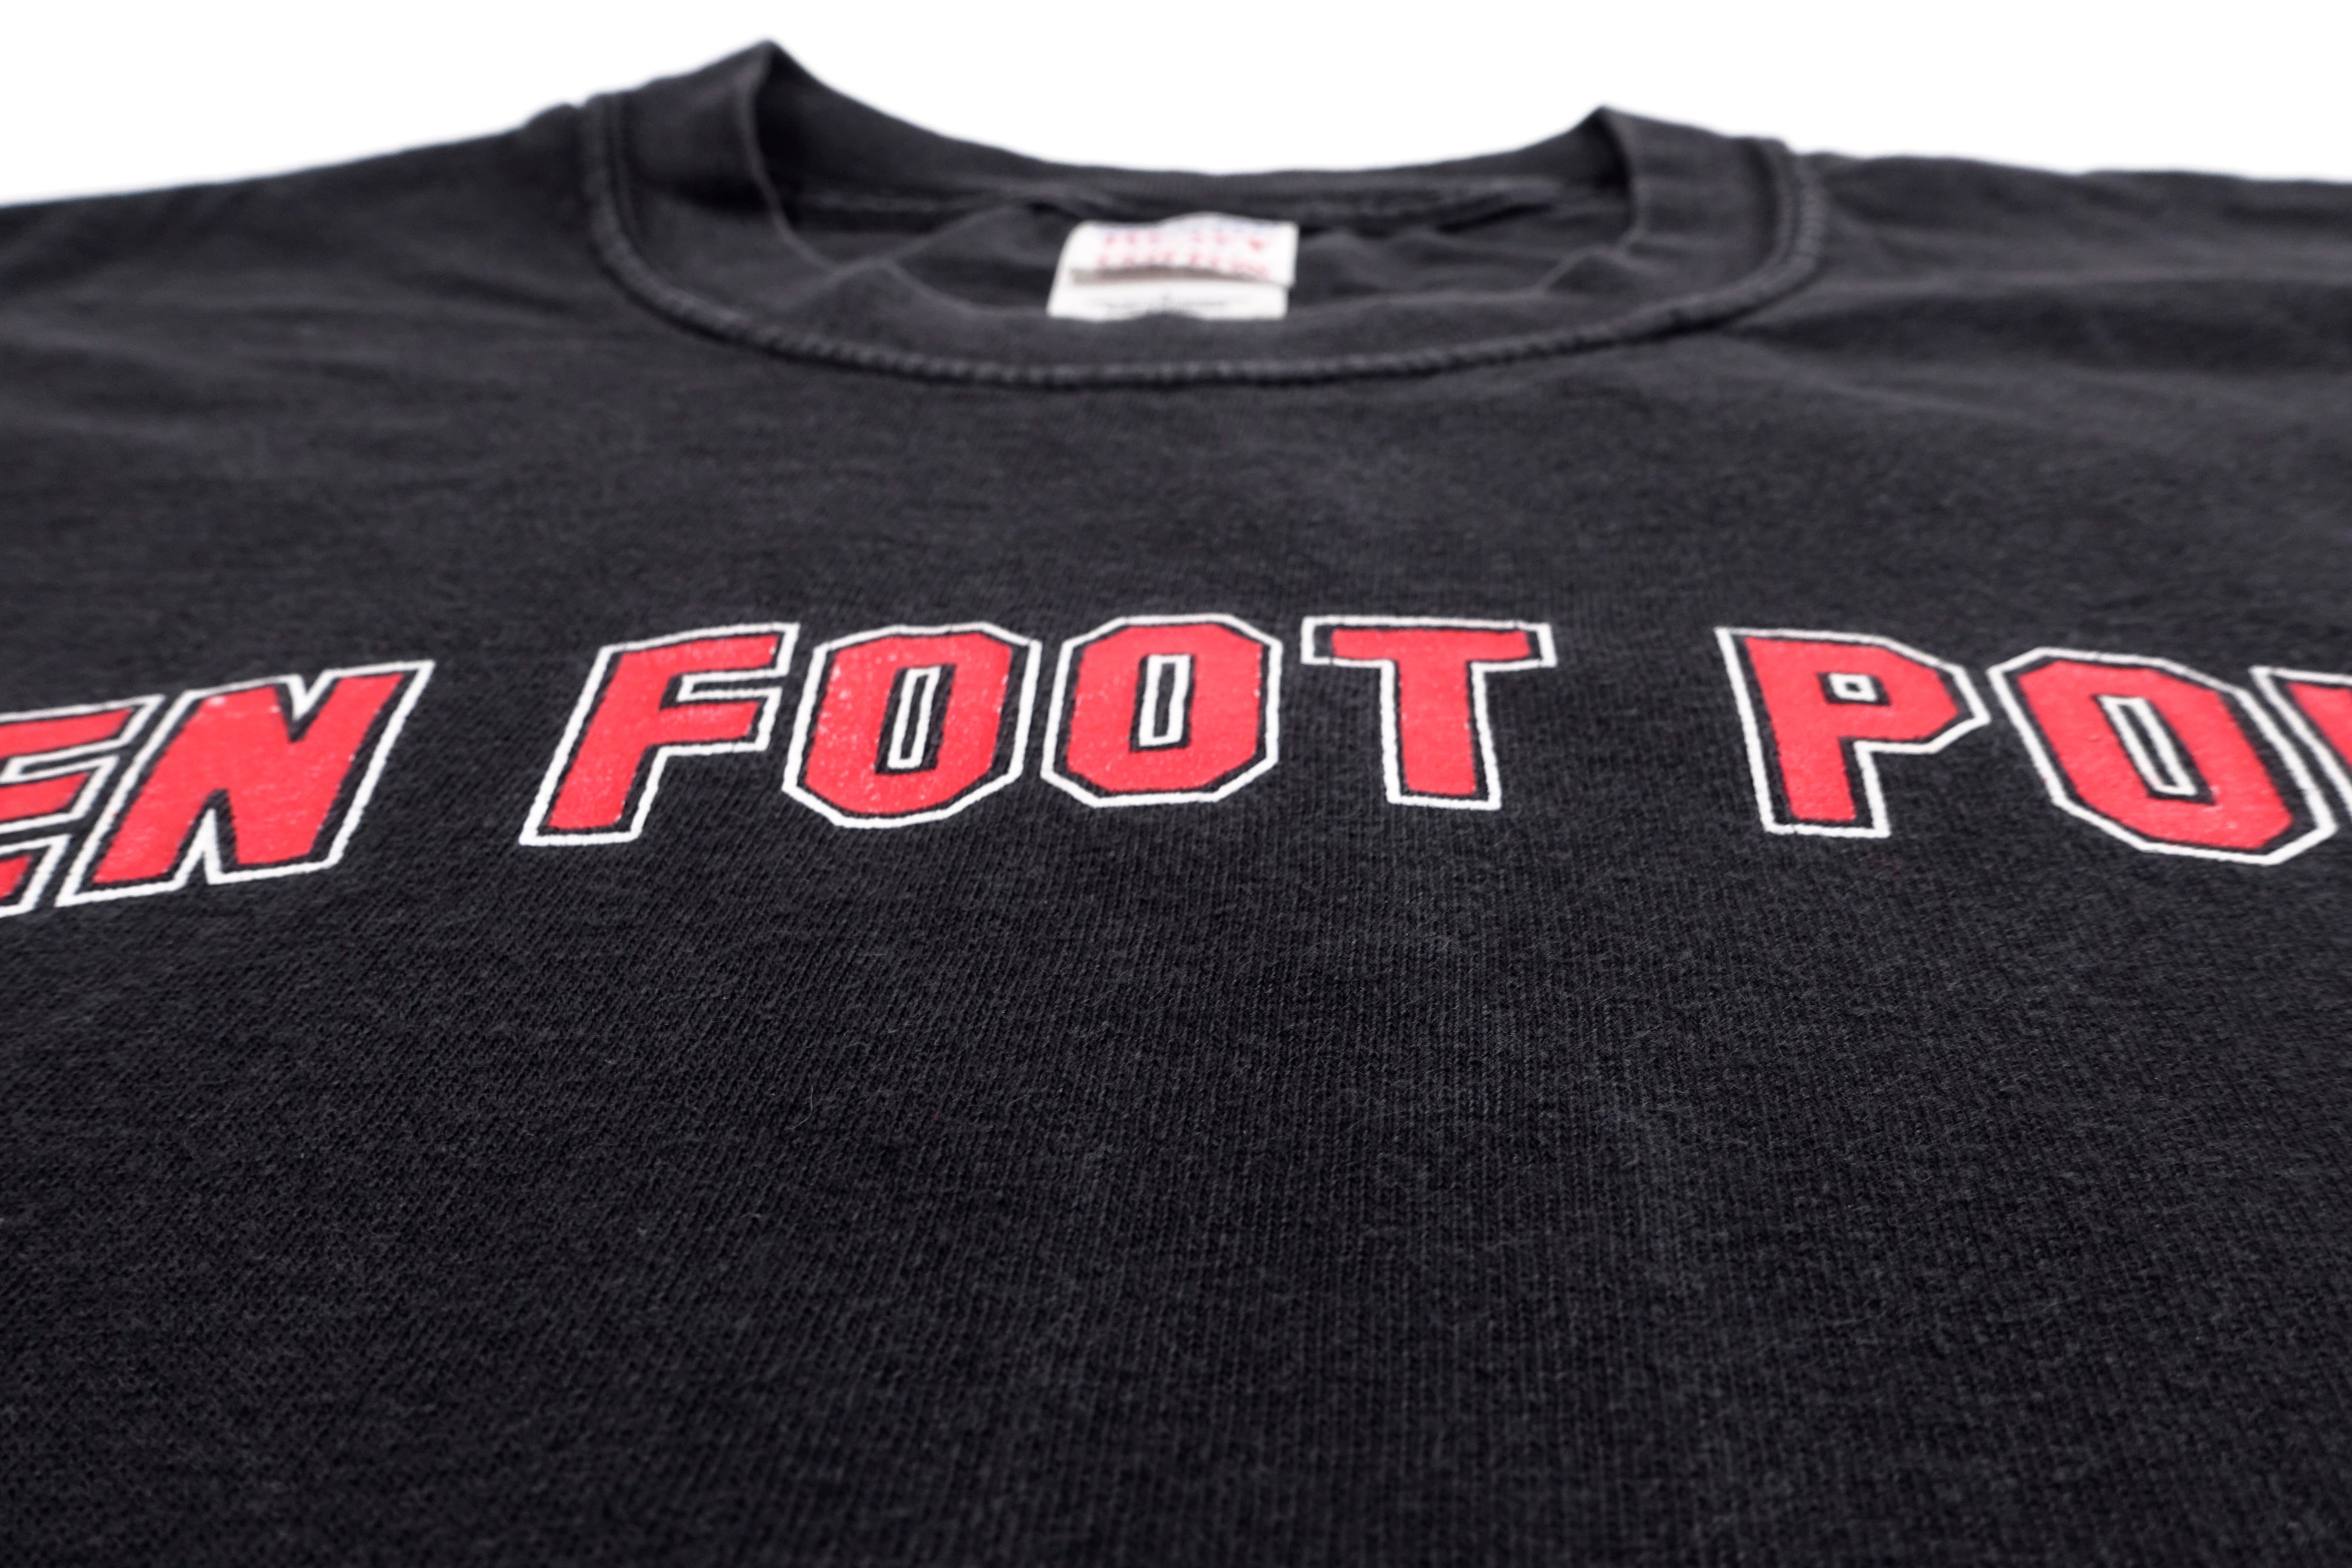 Ten Foot Pole ‎– Band Photo 90's Tour Shirt Size Large